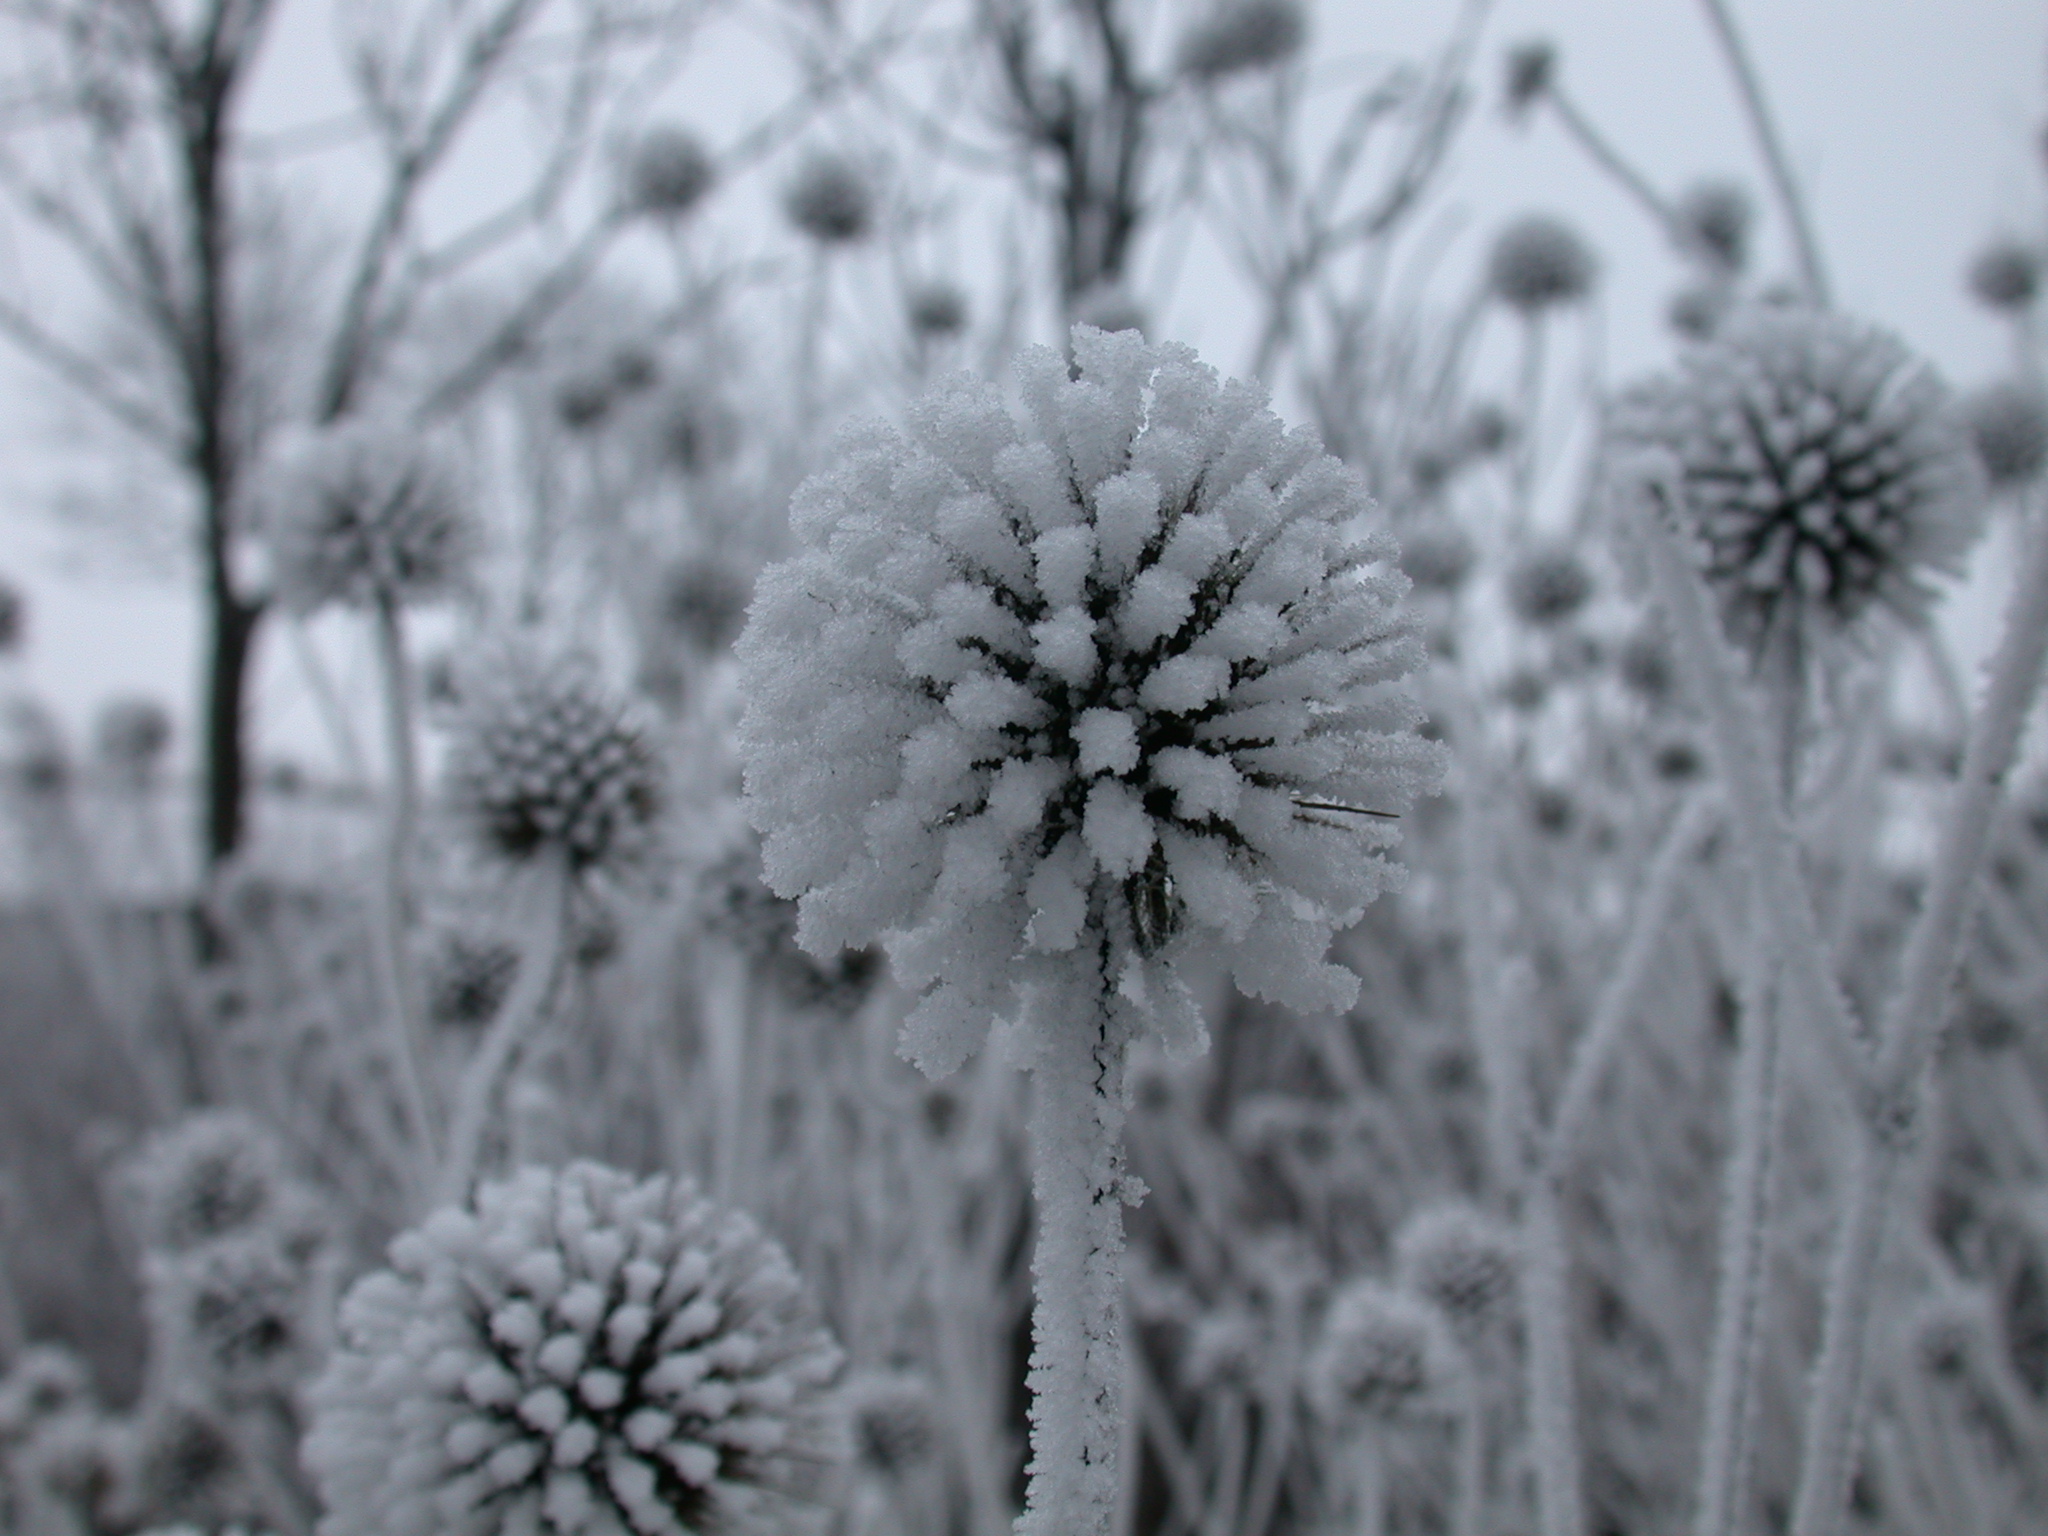 Image*After : photos : nature plants spheres thistle frozen winter ...